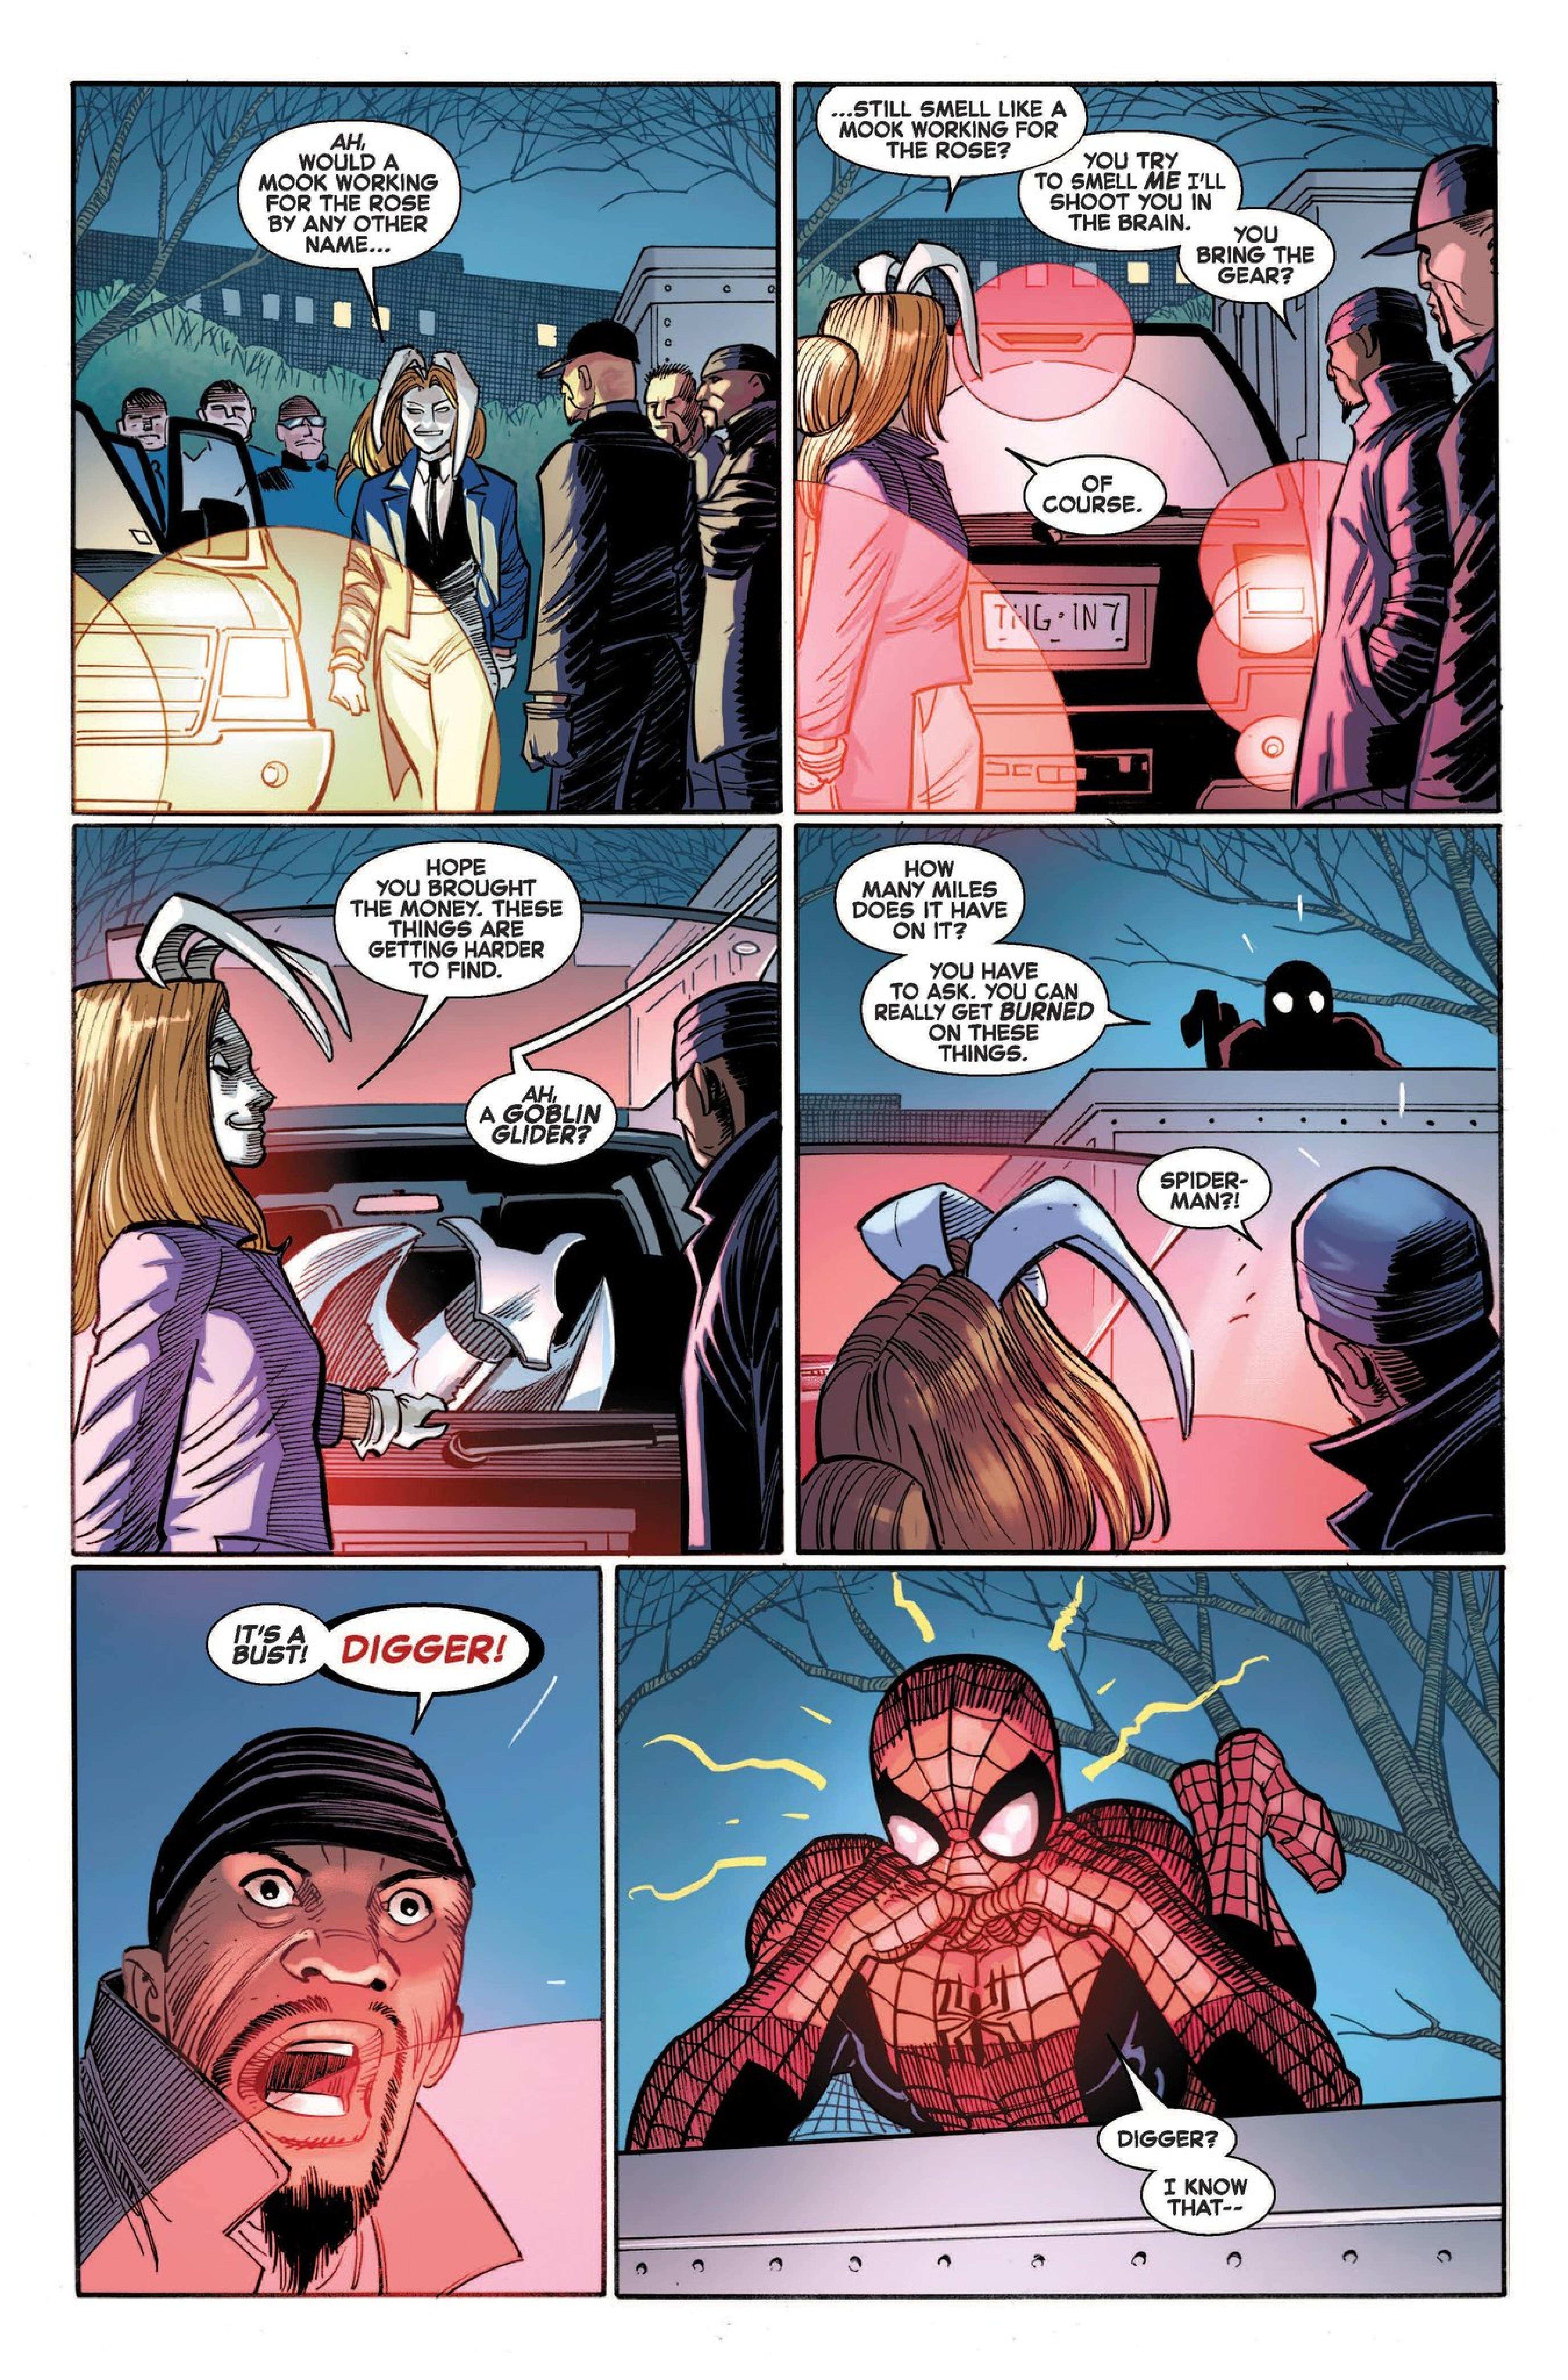 Amazing Spider-Man #1 Ramos Variant (2022)